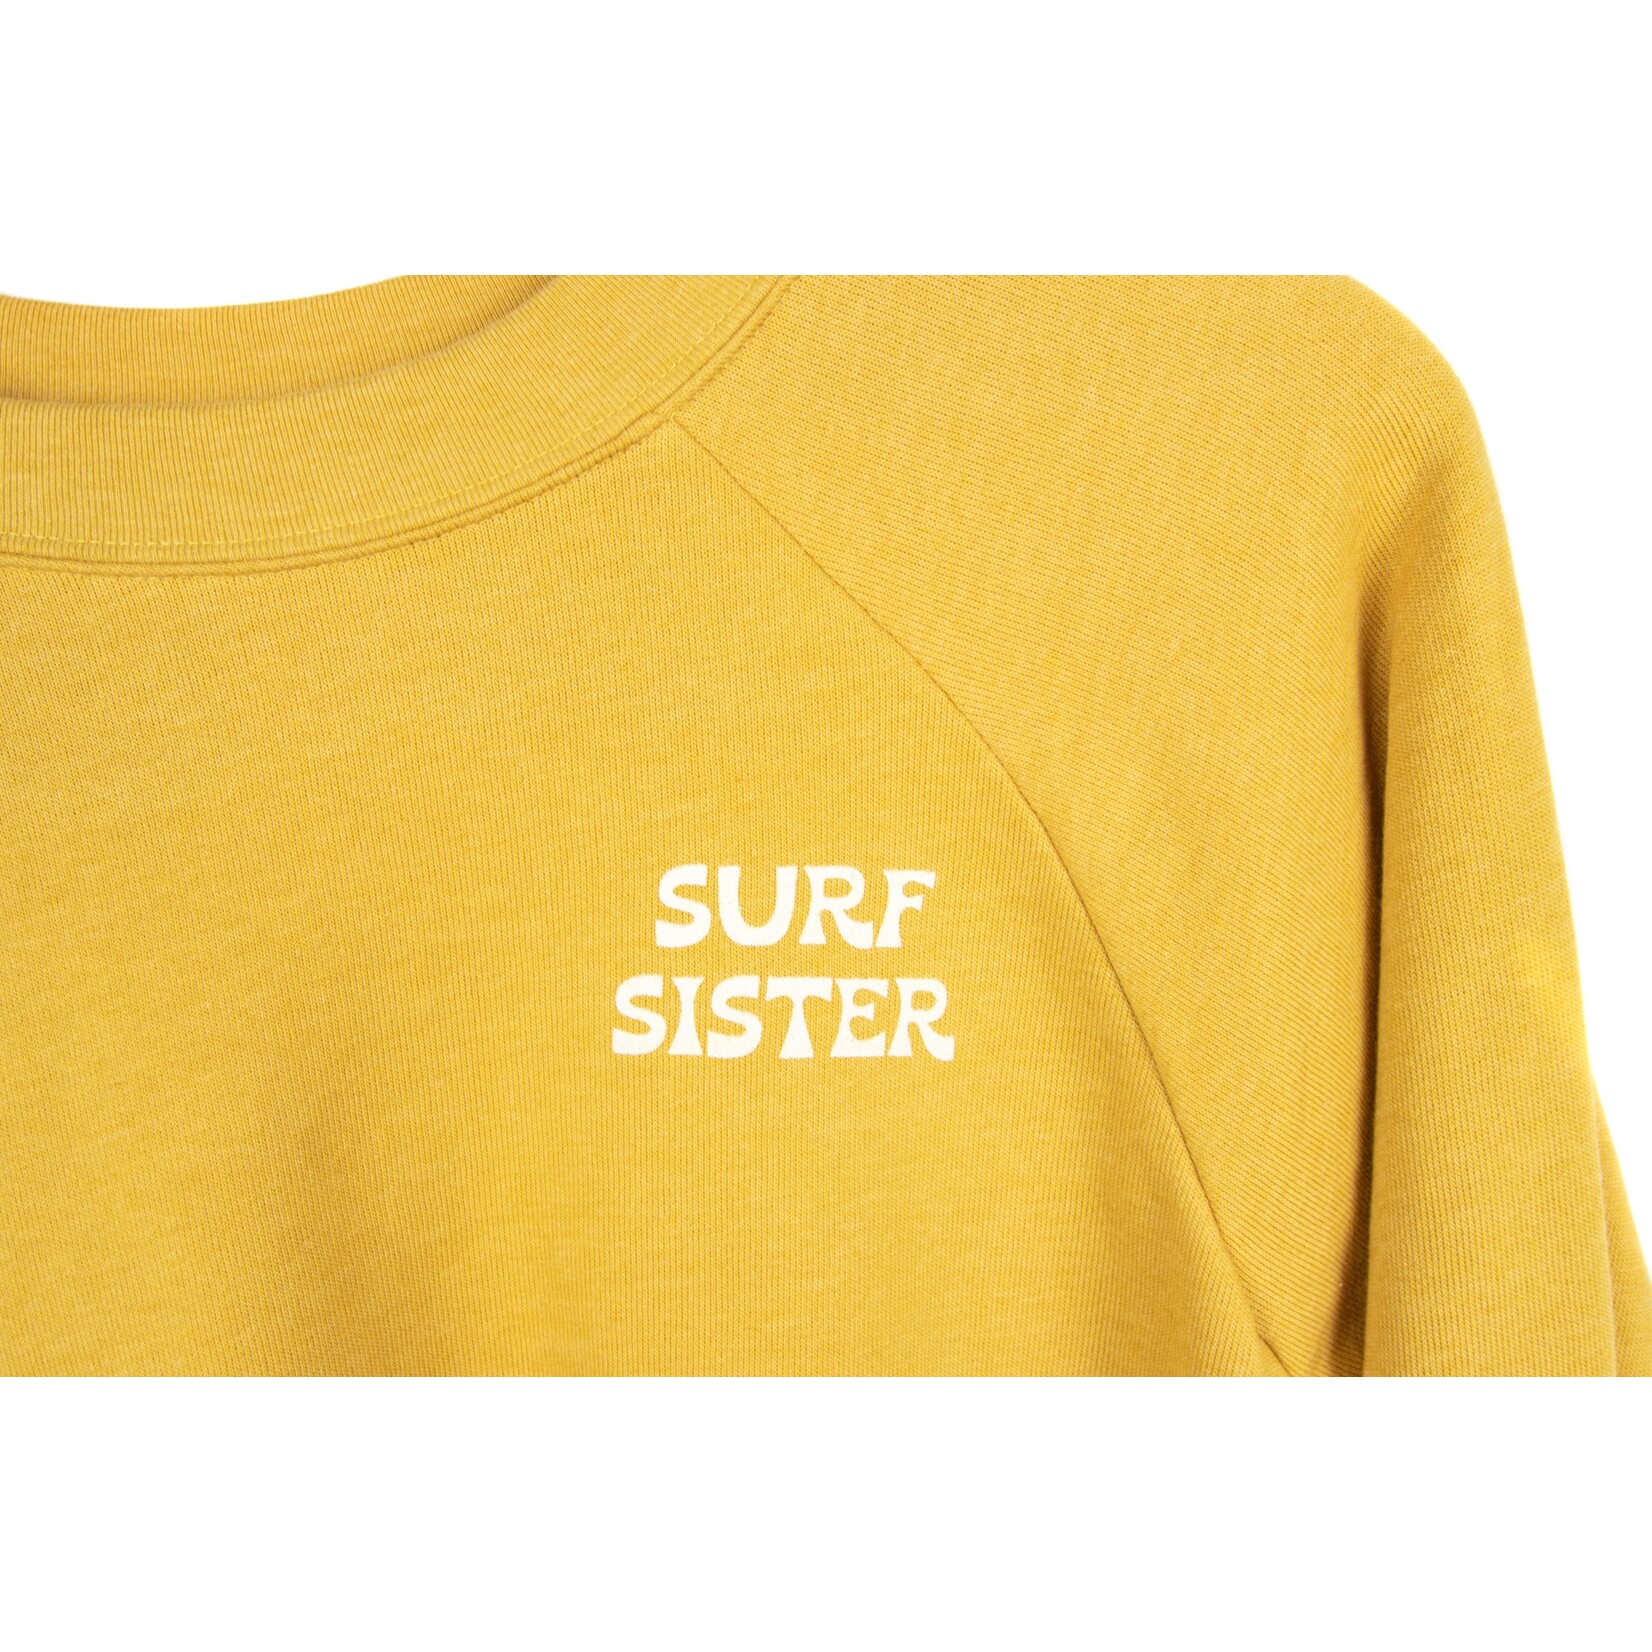 Surf Sister SURF SISTER CROP CREW